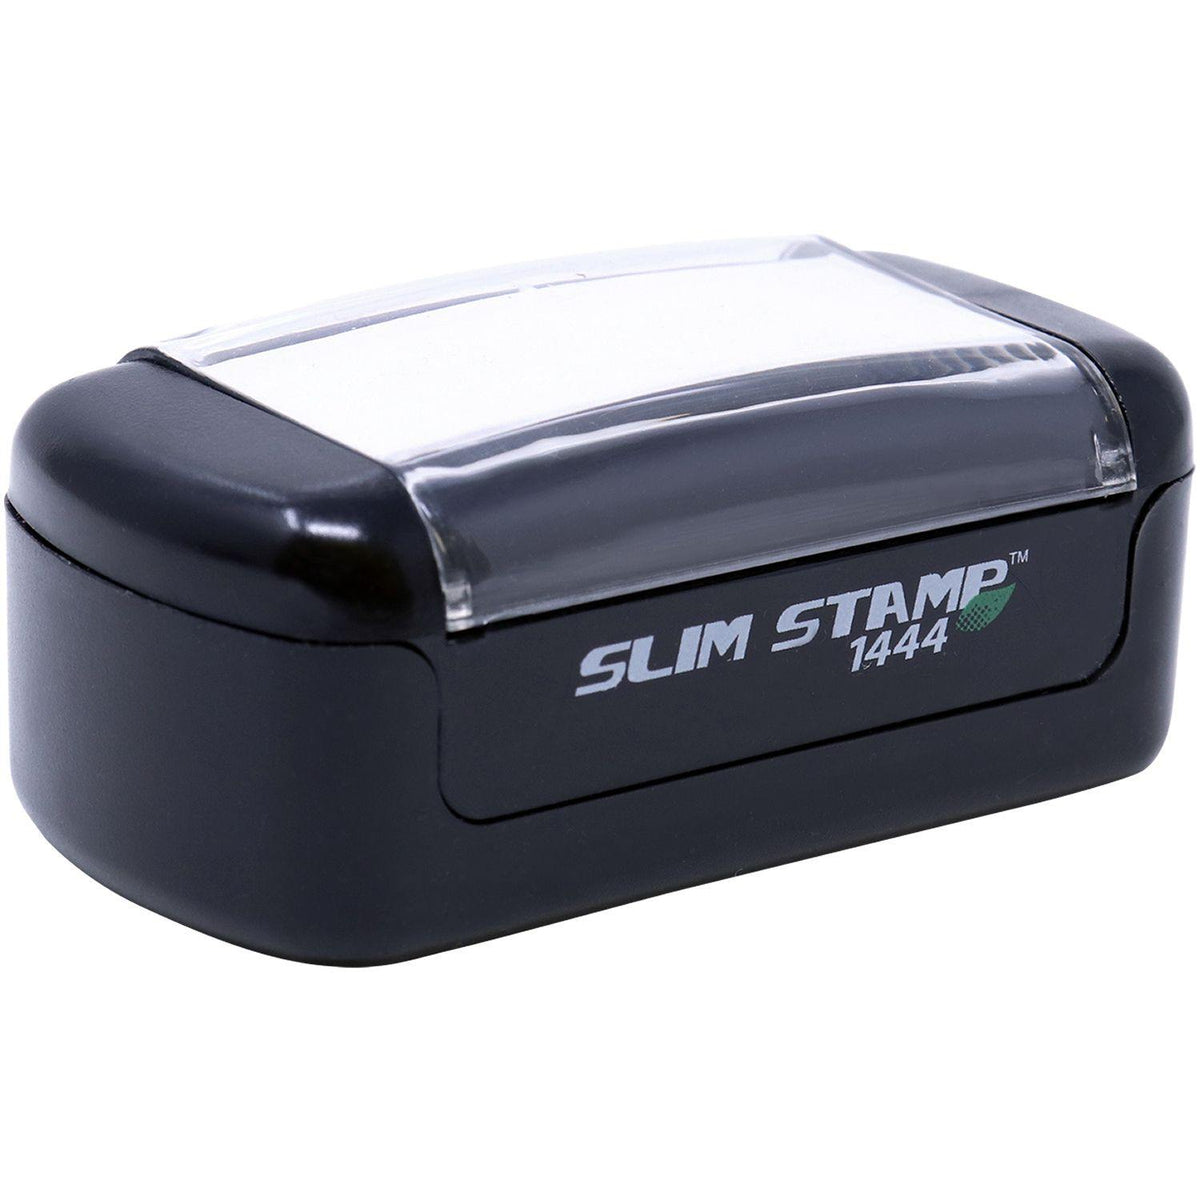 Alt View of Slim Pre Inked Urgent Stamp Mount Angle